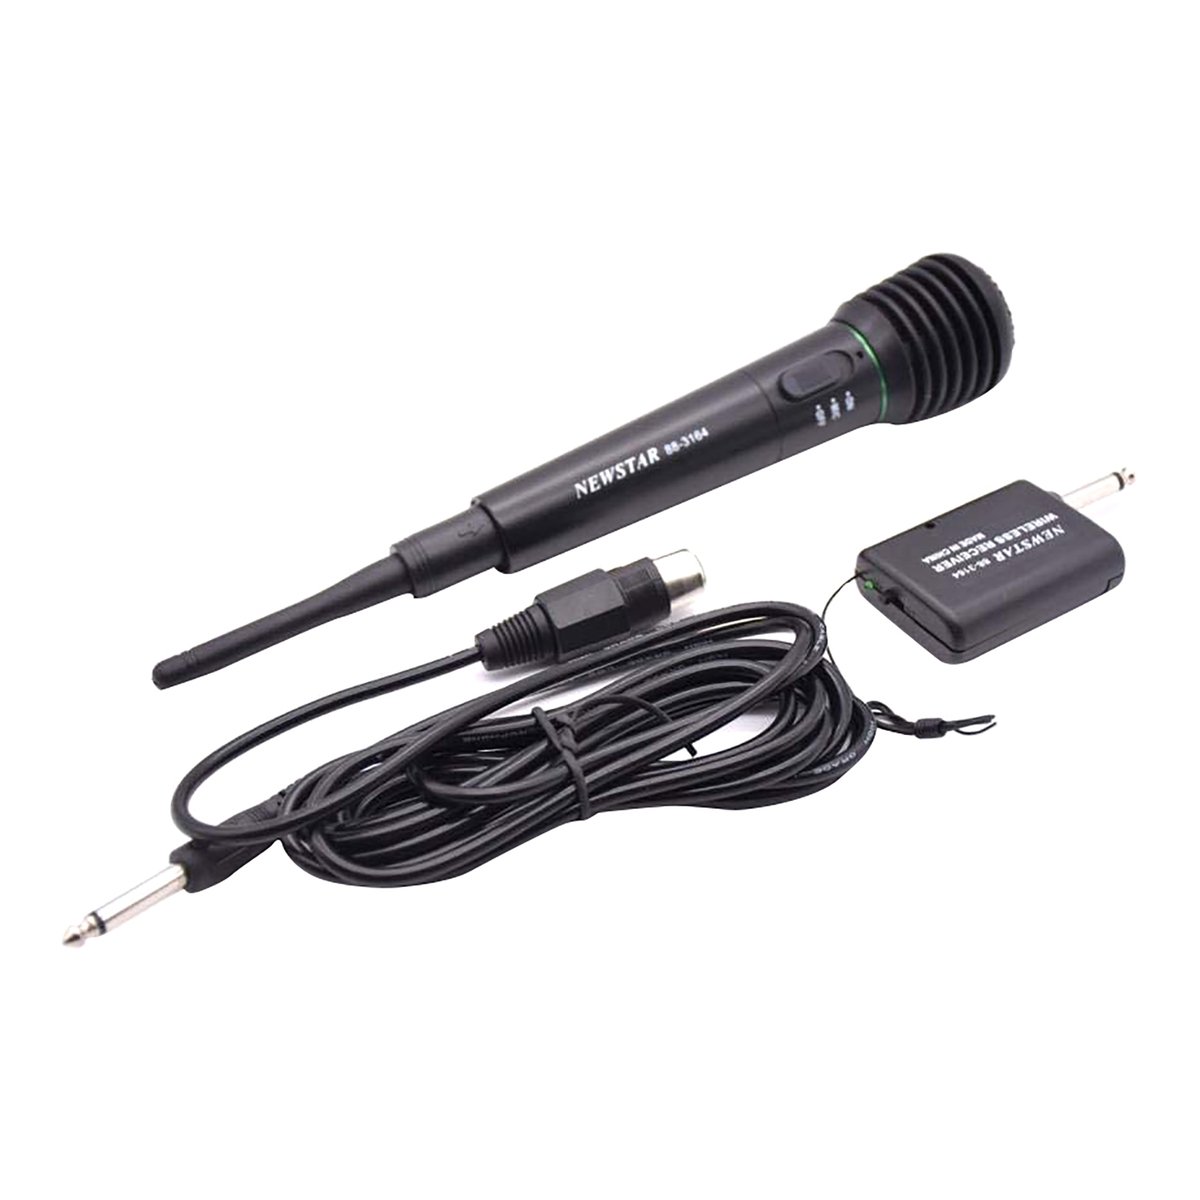 Newstar Wireless Microphone 88-3164